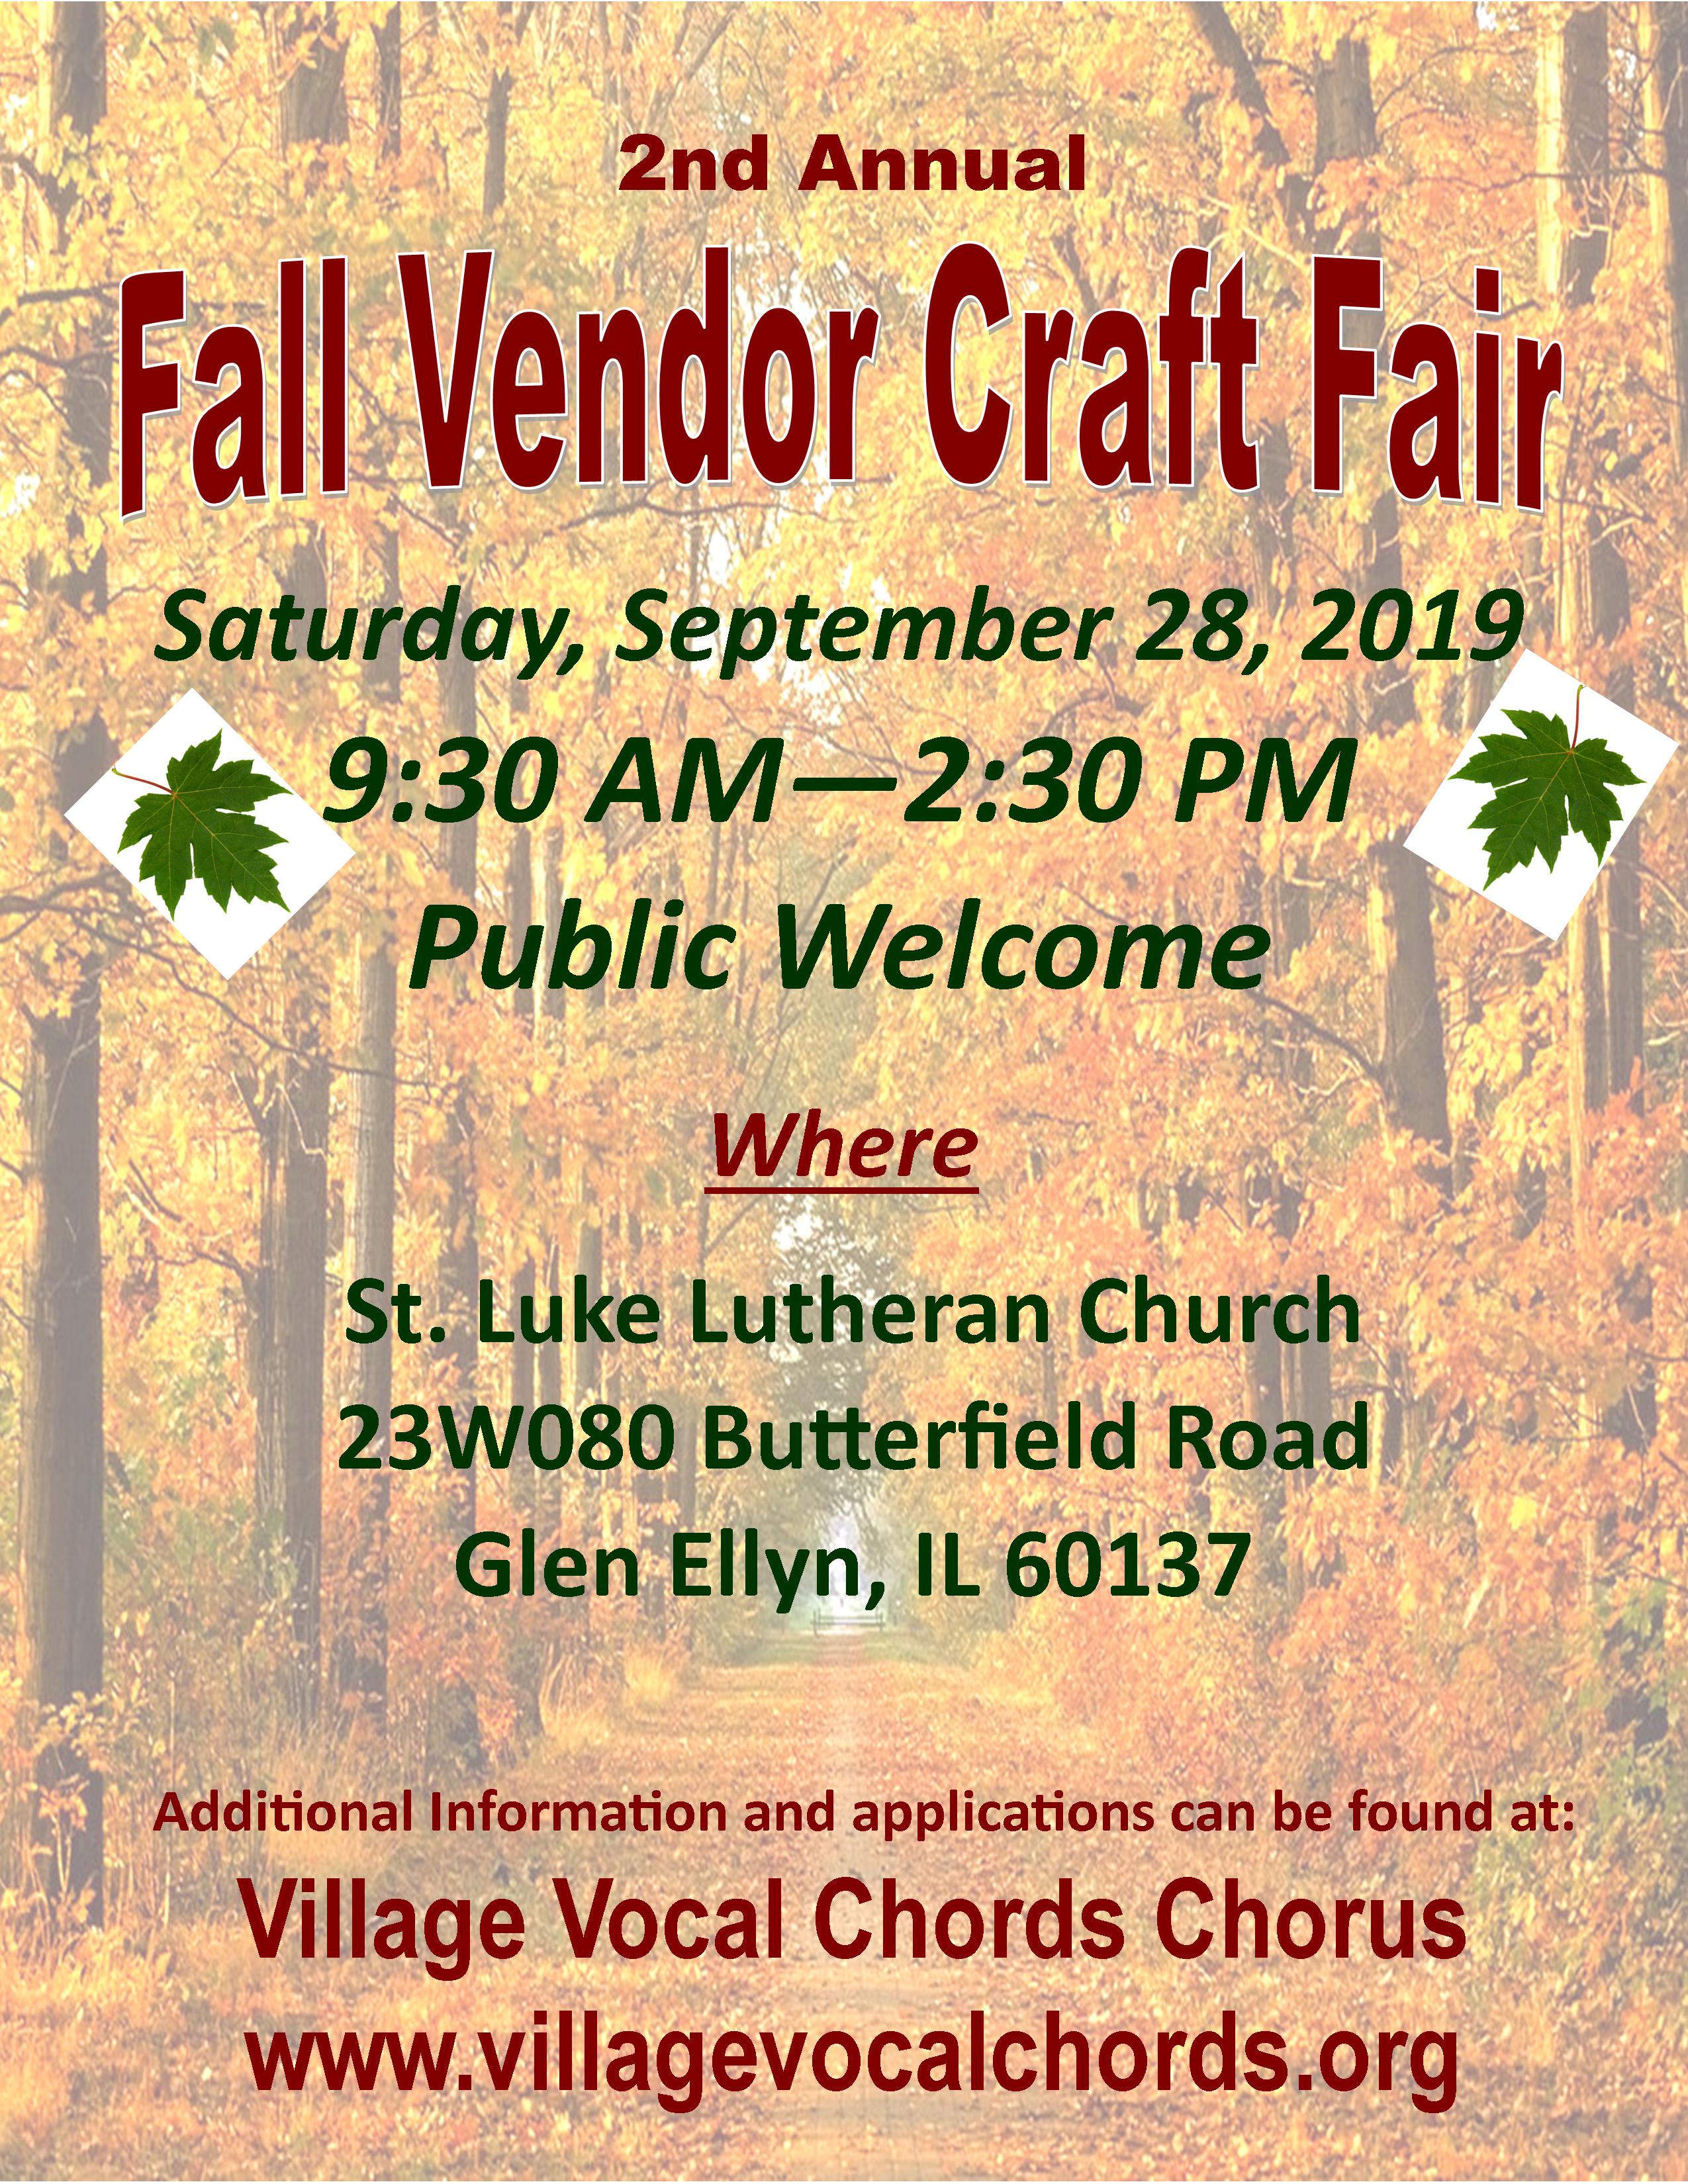 Fall Vendor Craft Fair - Saturday Sept. 28, 2019